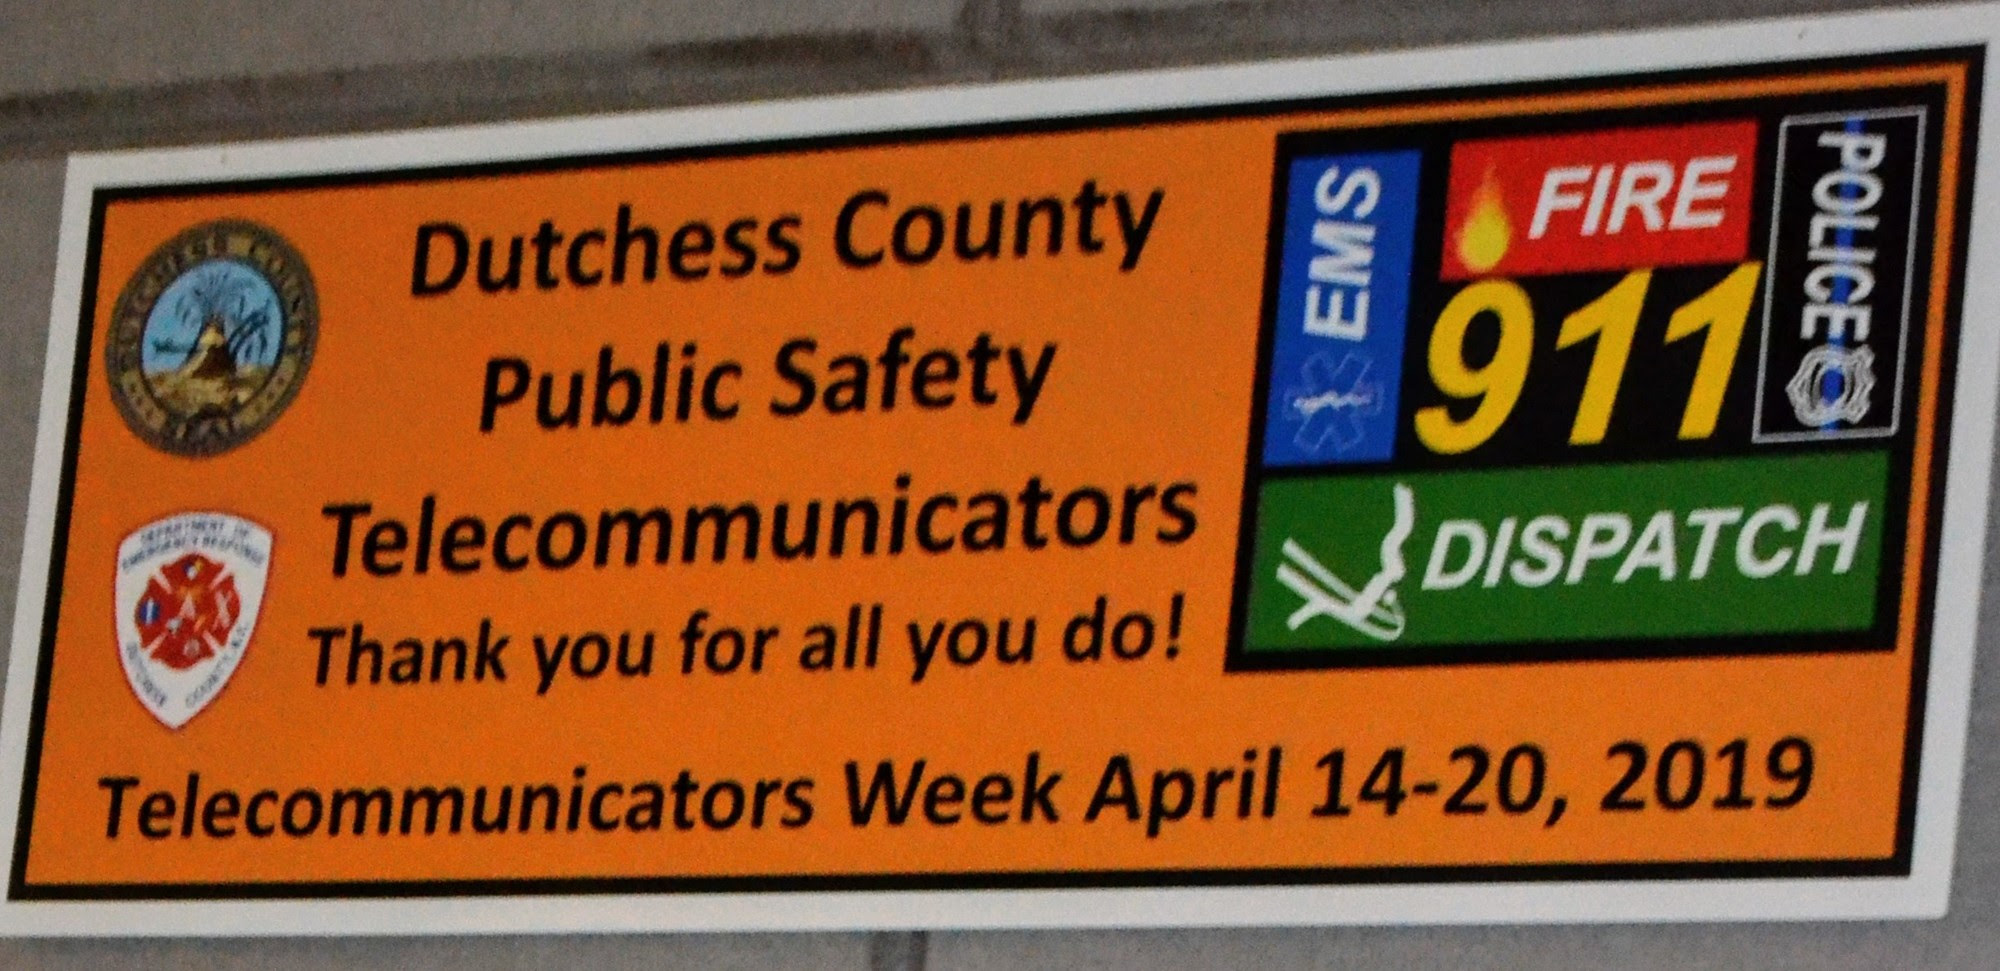 This week is Public Safety Telecommunicators Week